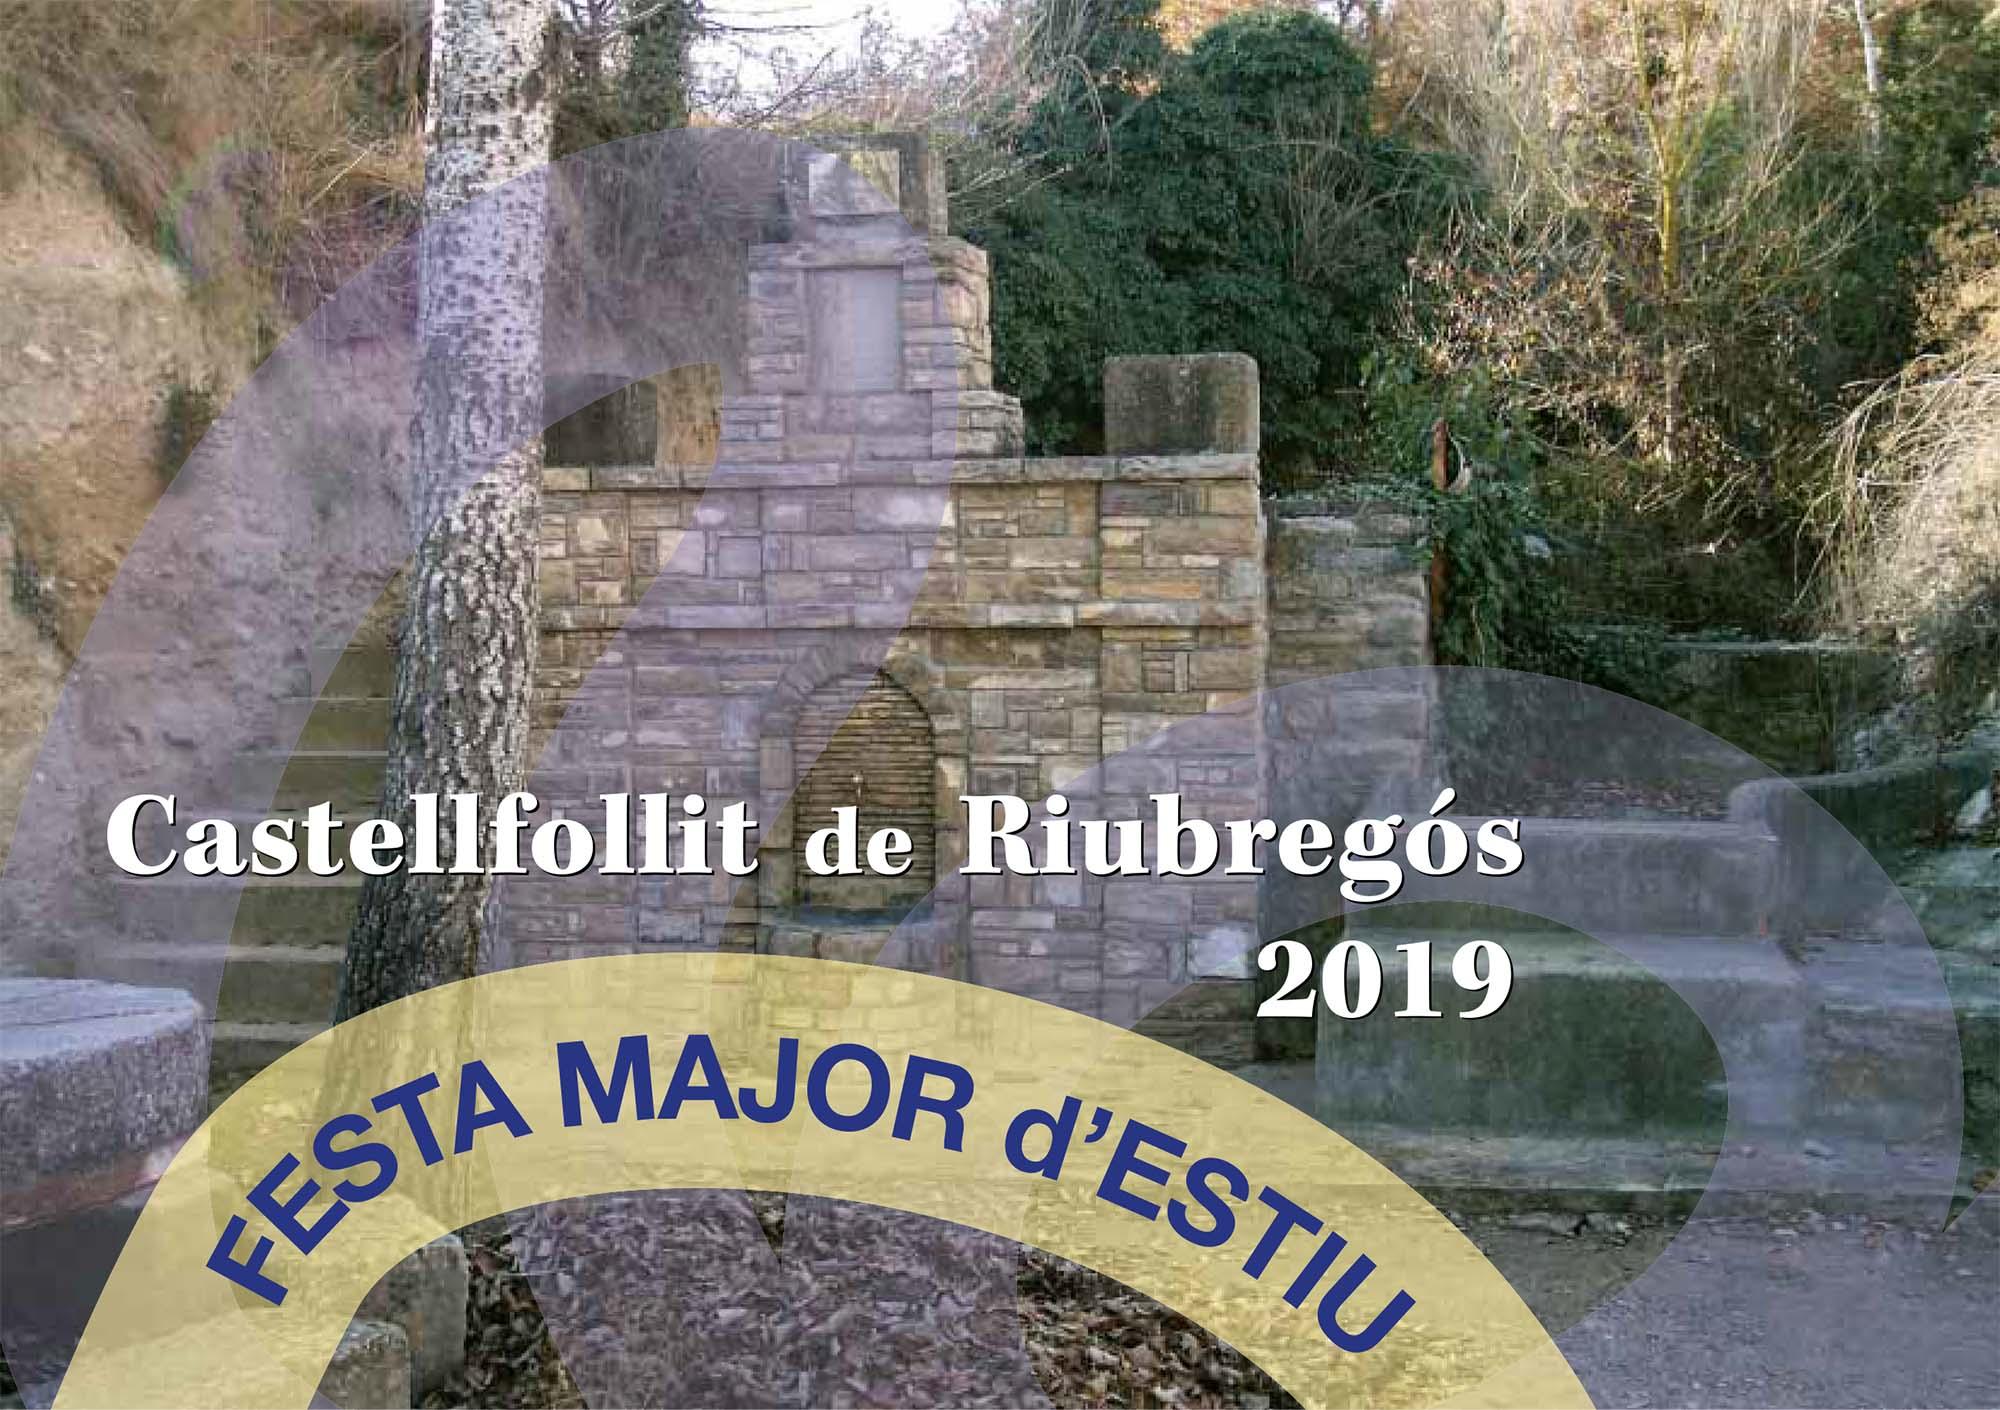 Festa major d'estiu de Castellfollit de Riubregós 2019